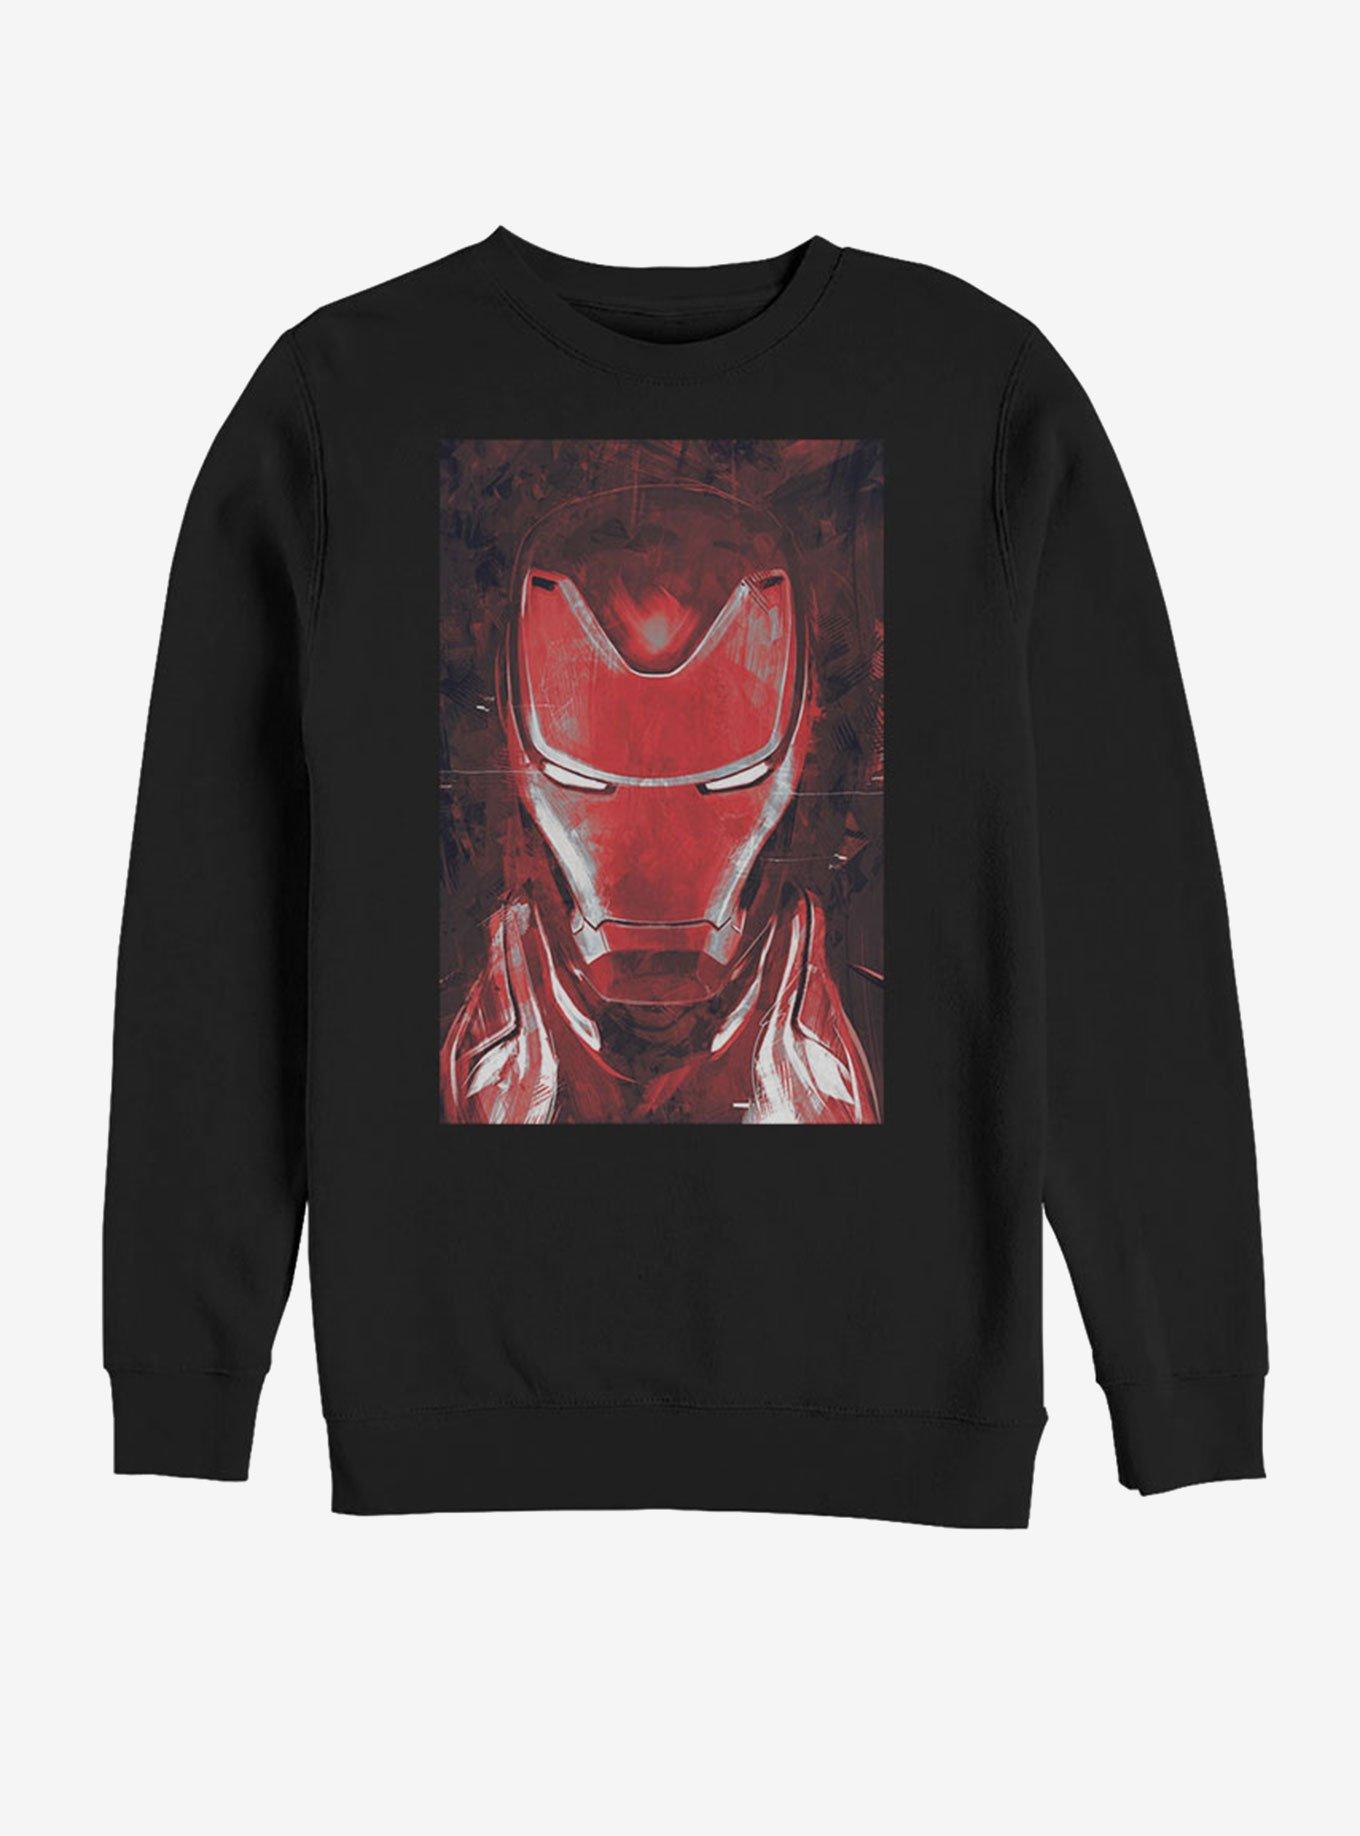 Marvel Avengers: Endgame Red Iron Man Sweatshirt